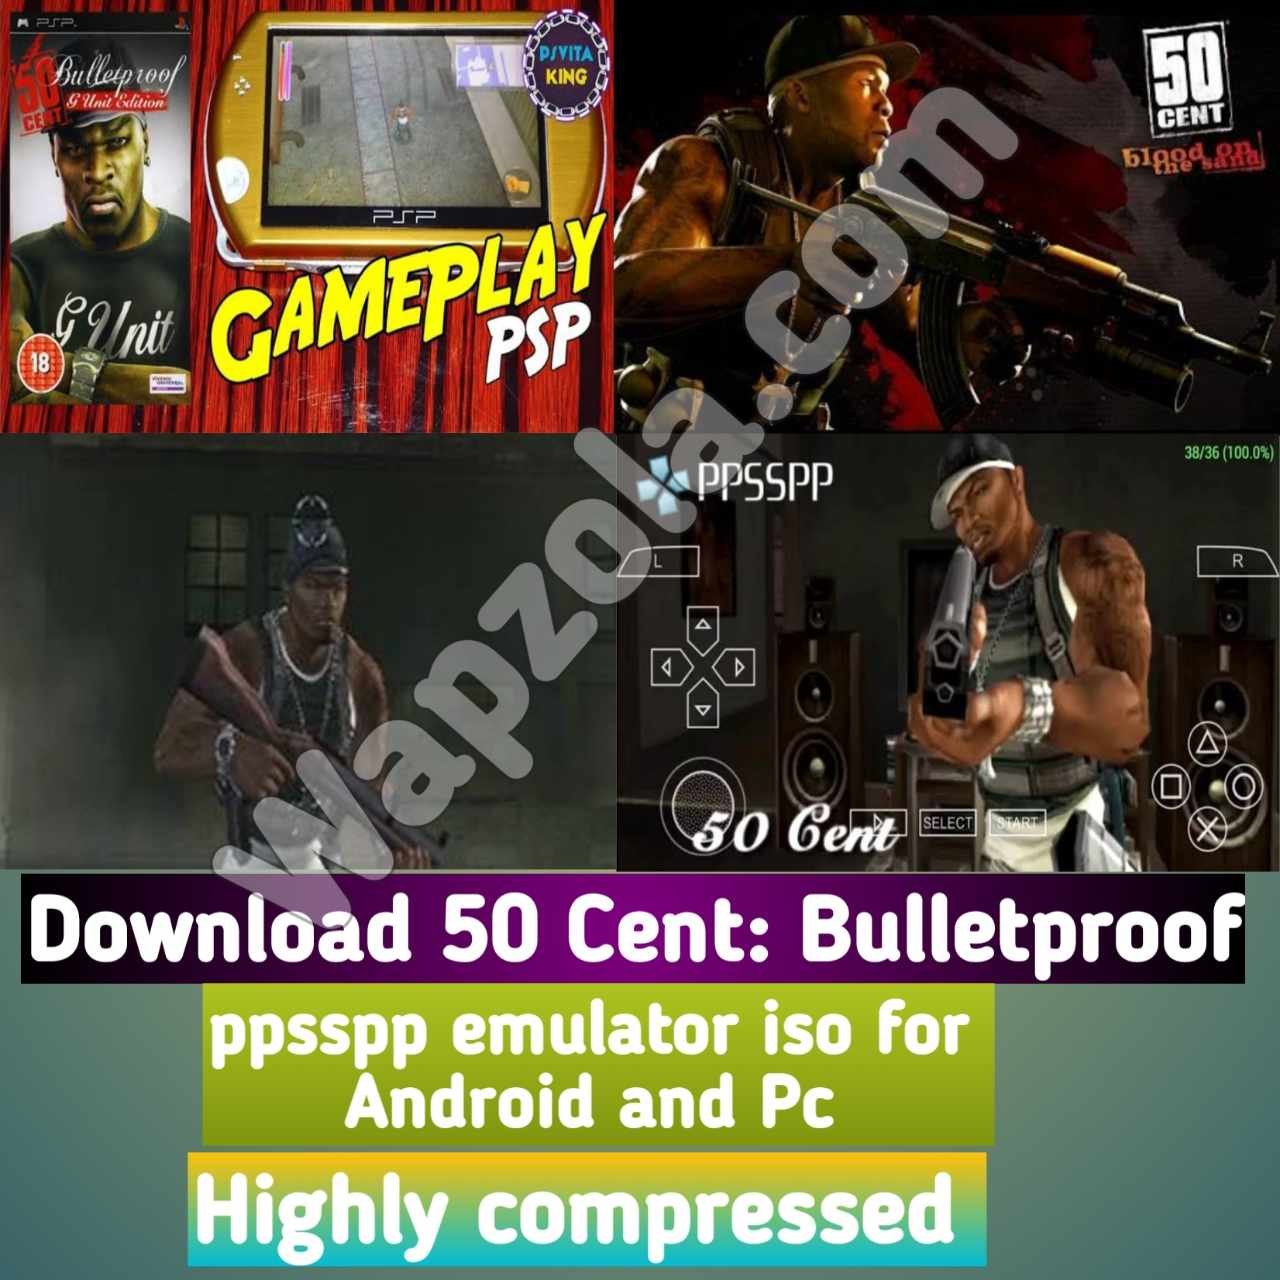 [Download] 50 Cent: Bulletproof Iso Ppsspp Emulator – PSP APK Iso ROM Highly Compressed 50MB